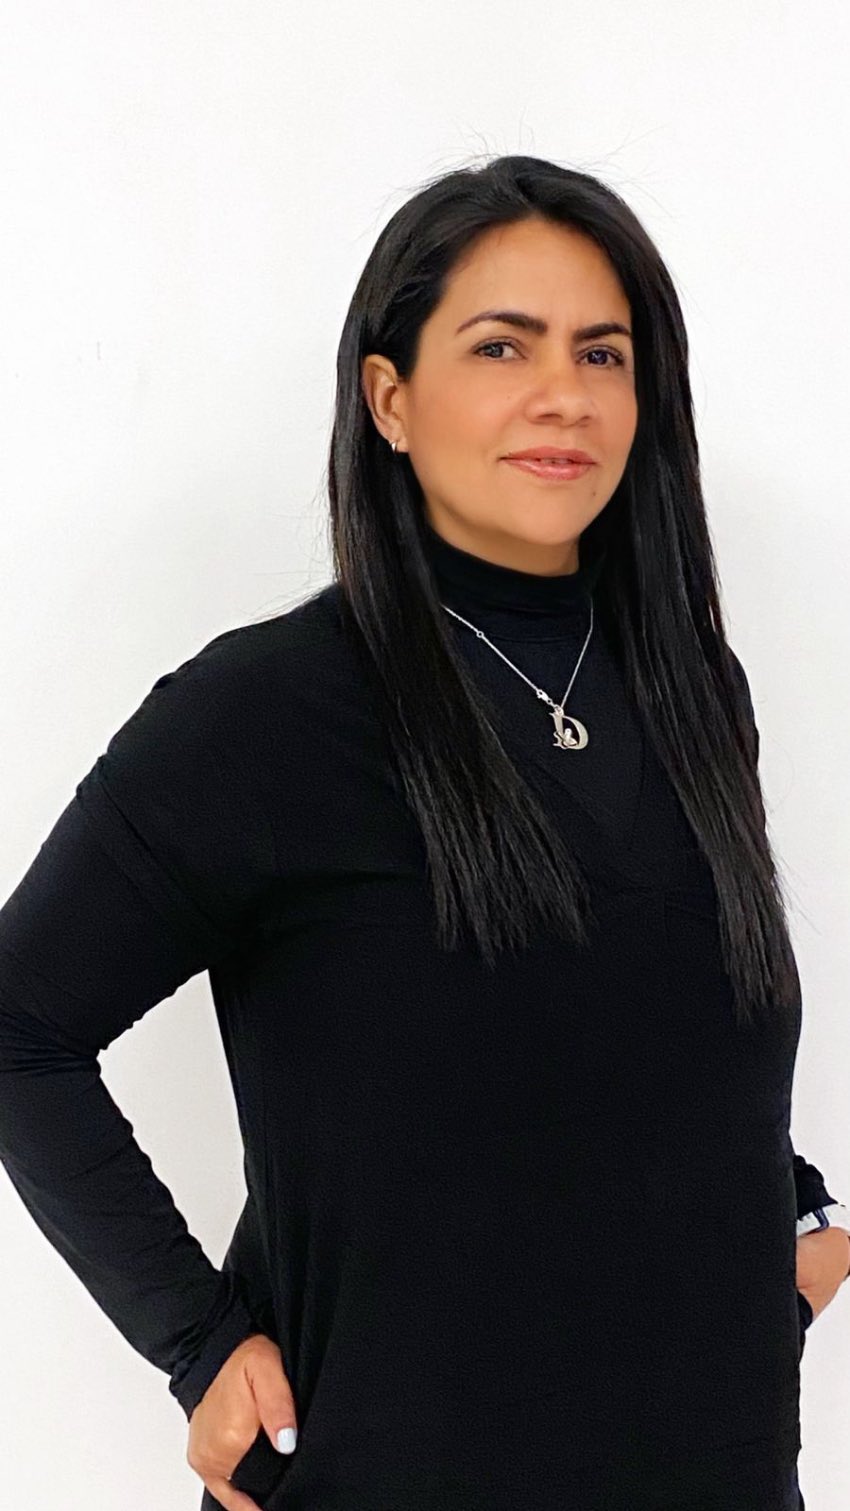 Diana Pérez, editorial director of RÉCORD